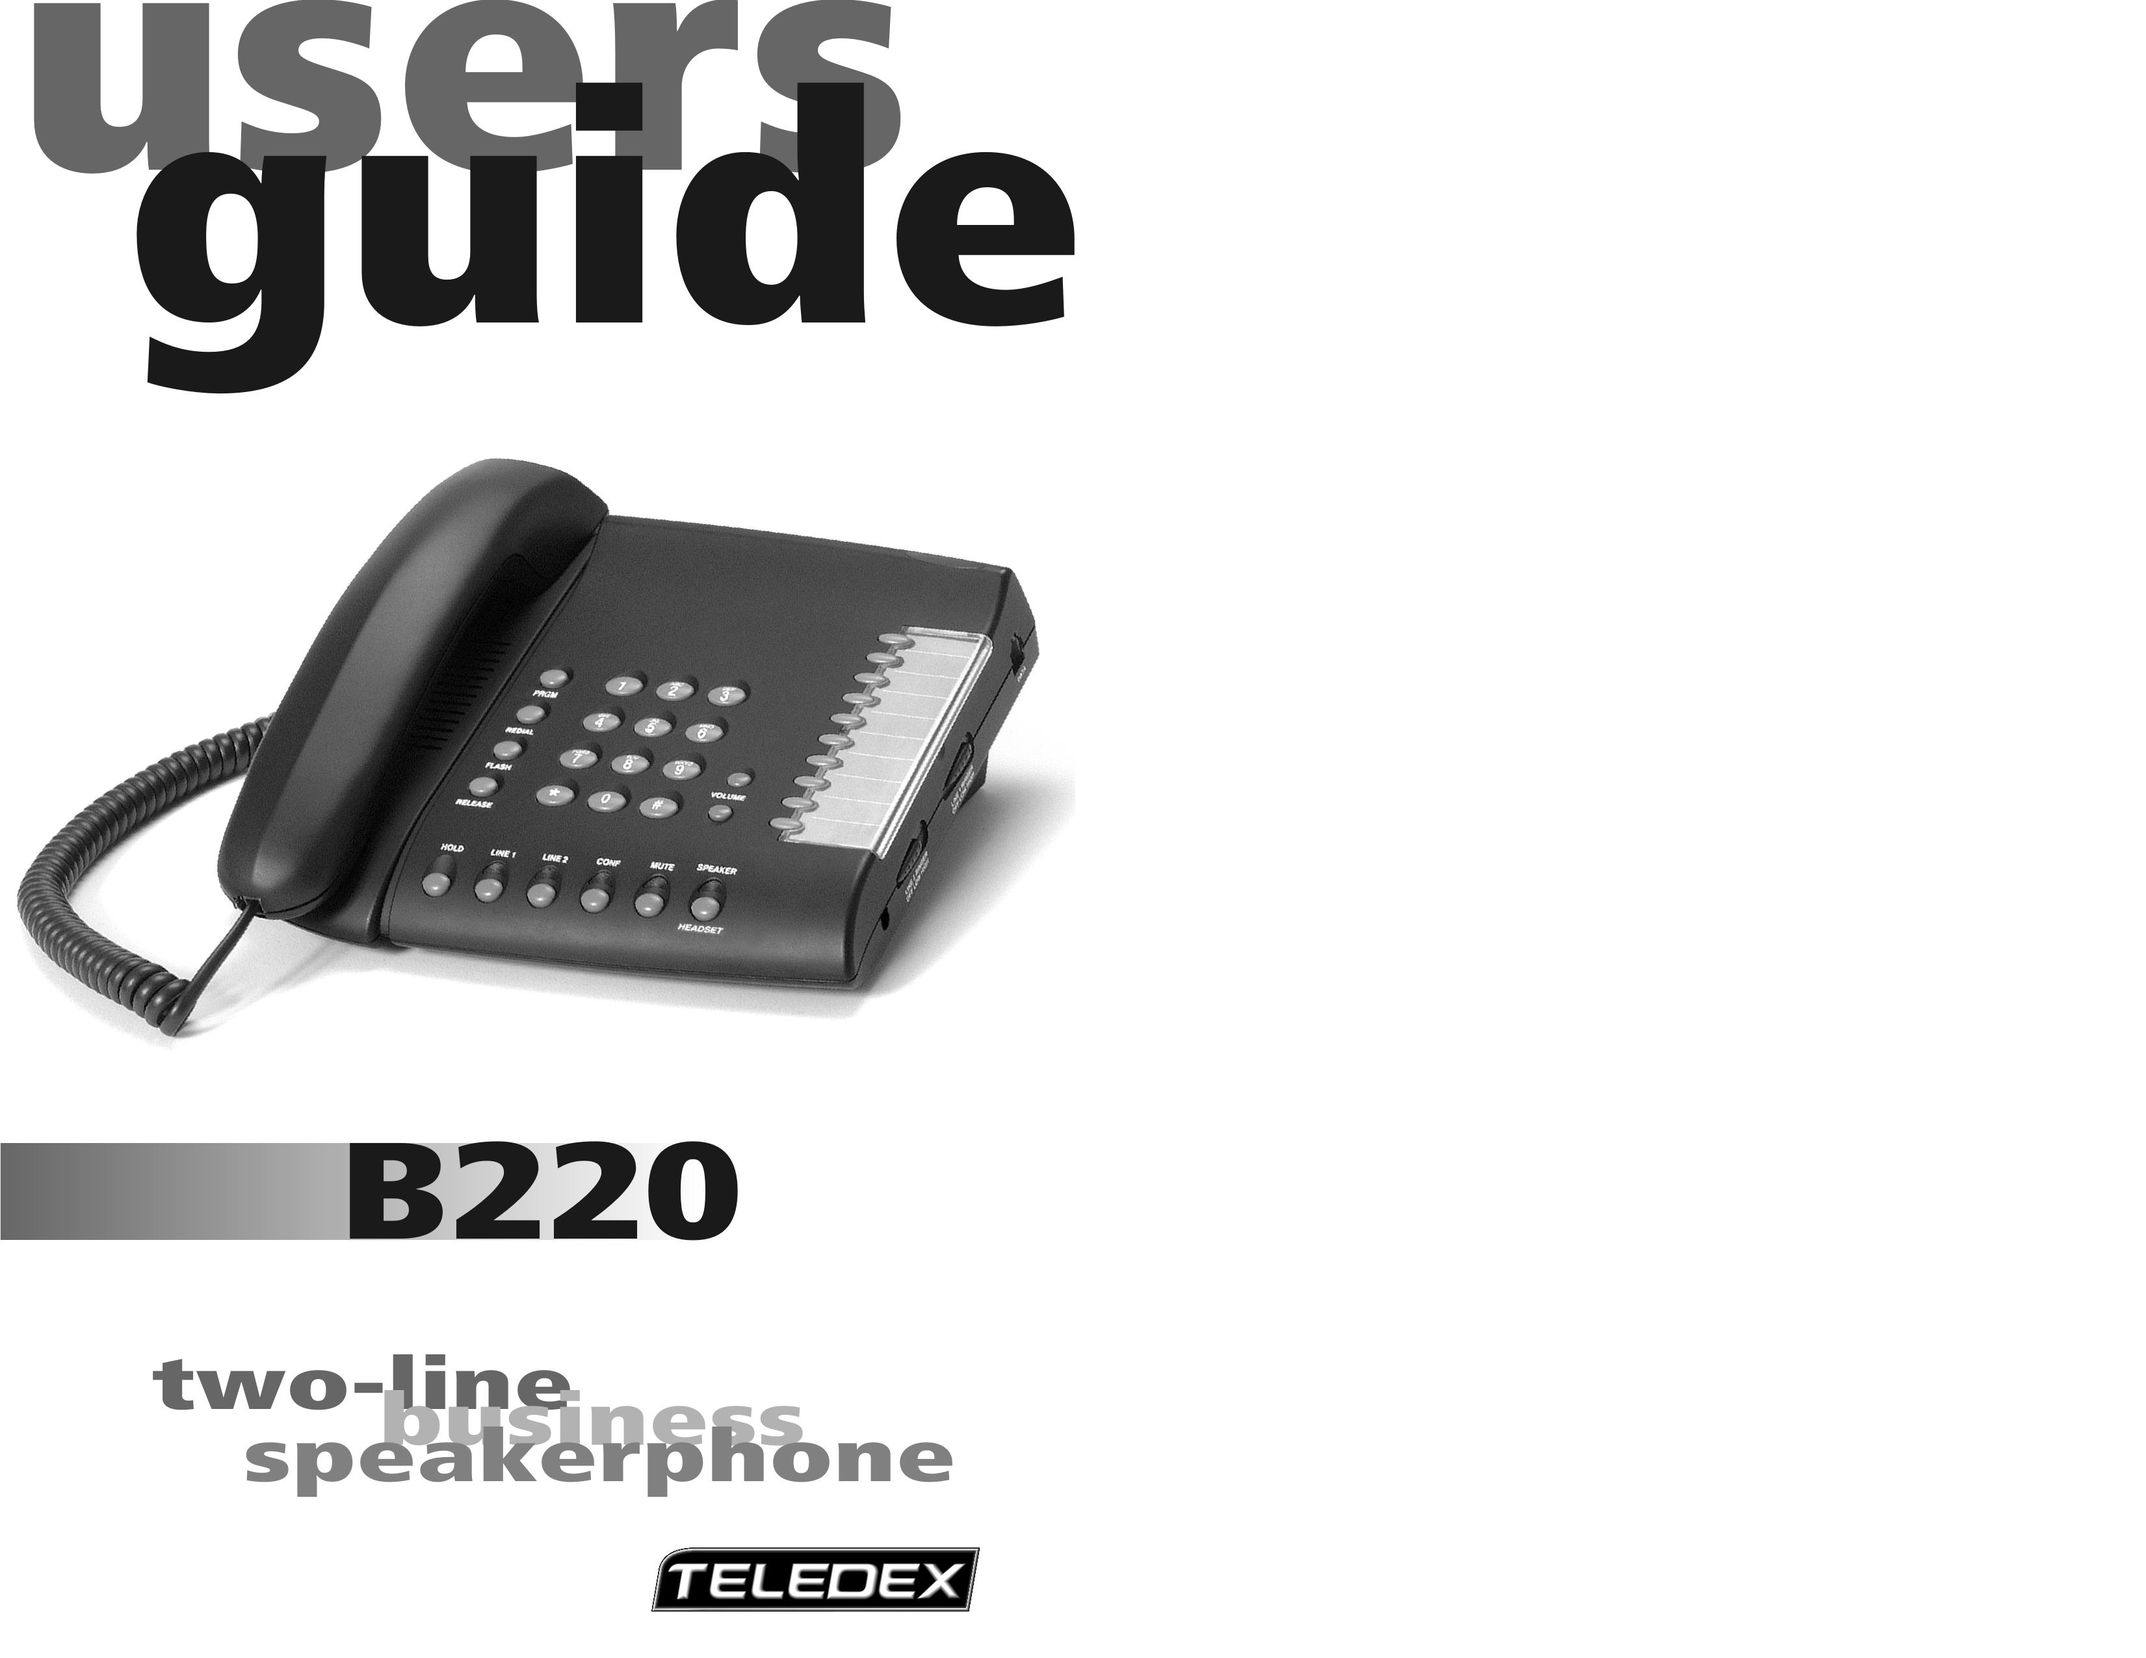 Teledex B220 Conference Phone User Manual